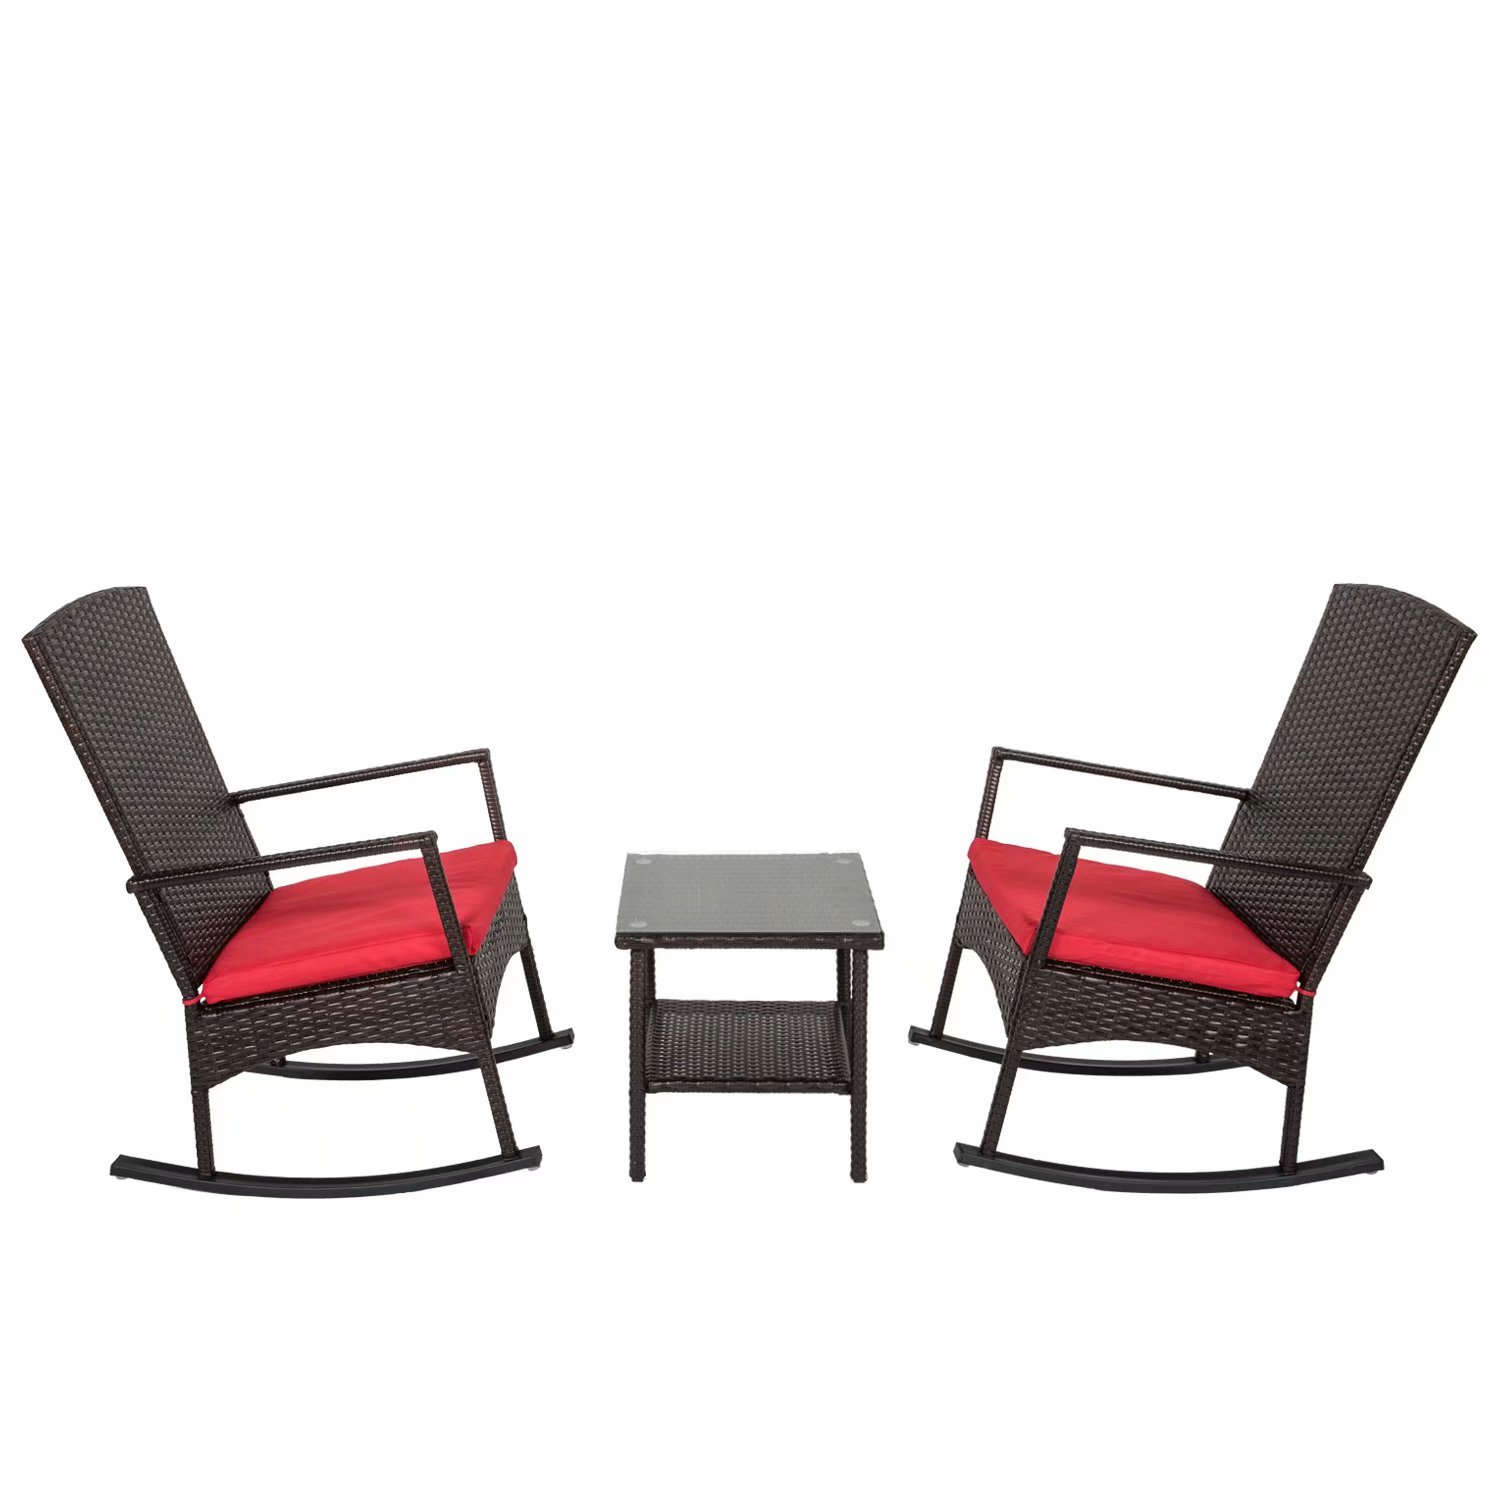 Kinbor 3Pcs Wicker Rattan Rocker Chair Side Tea Table Set Garden Rocking Lounge Chair w/Removable Cushion - image 5 of 5